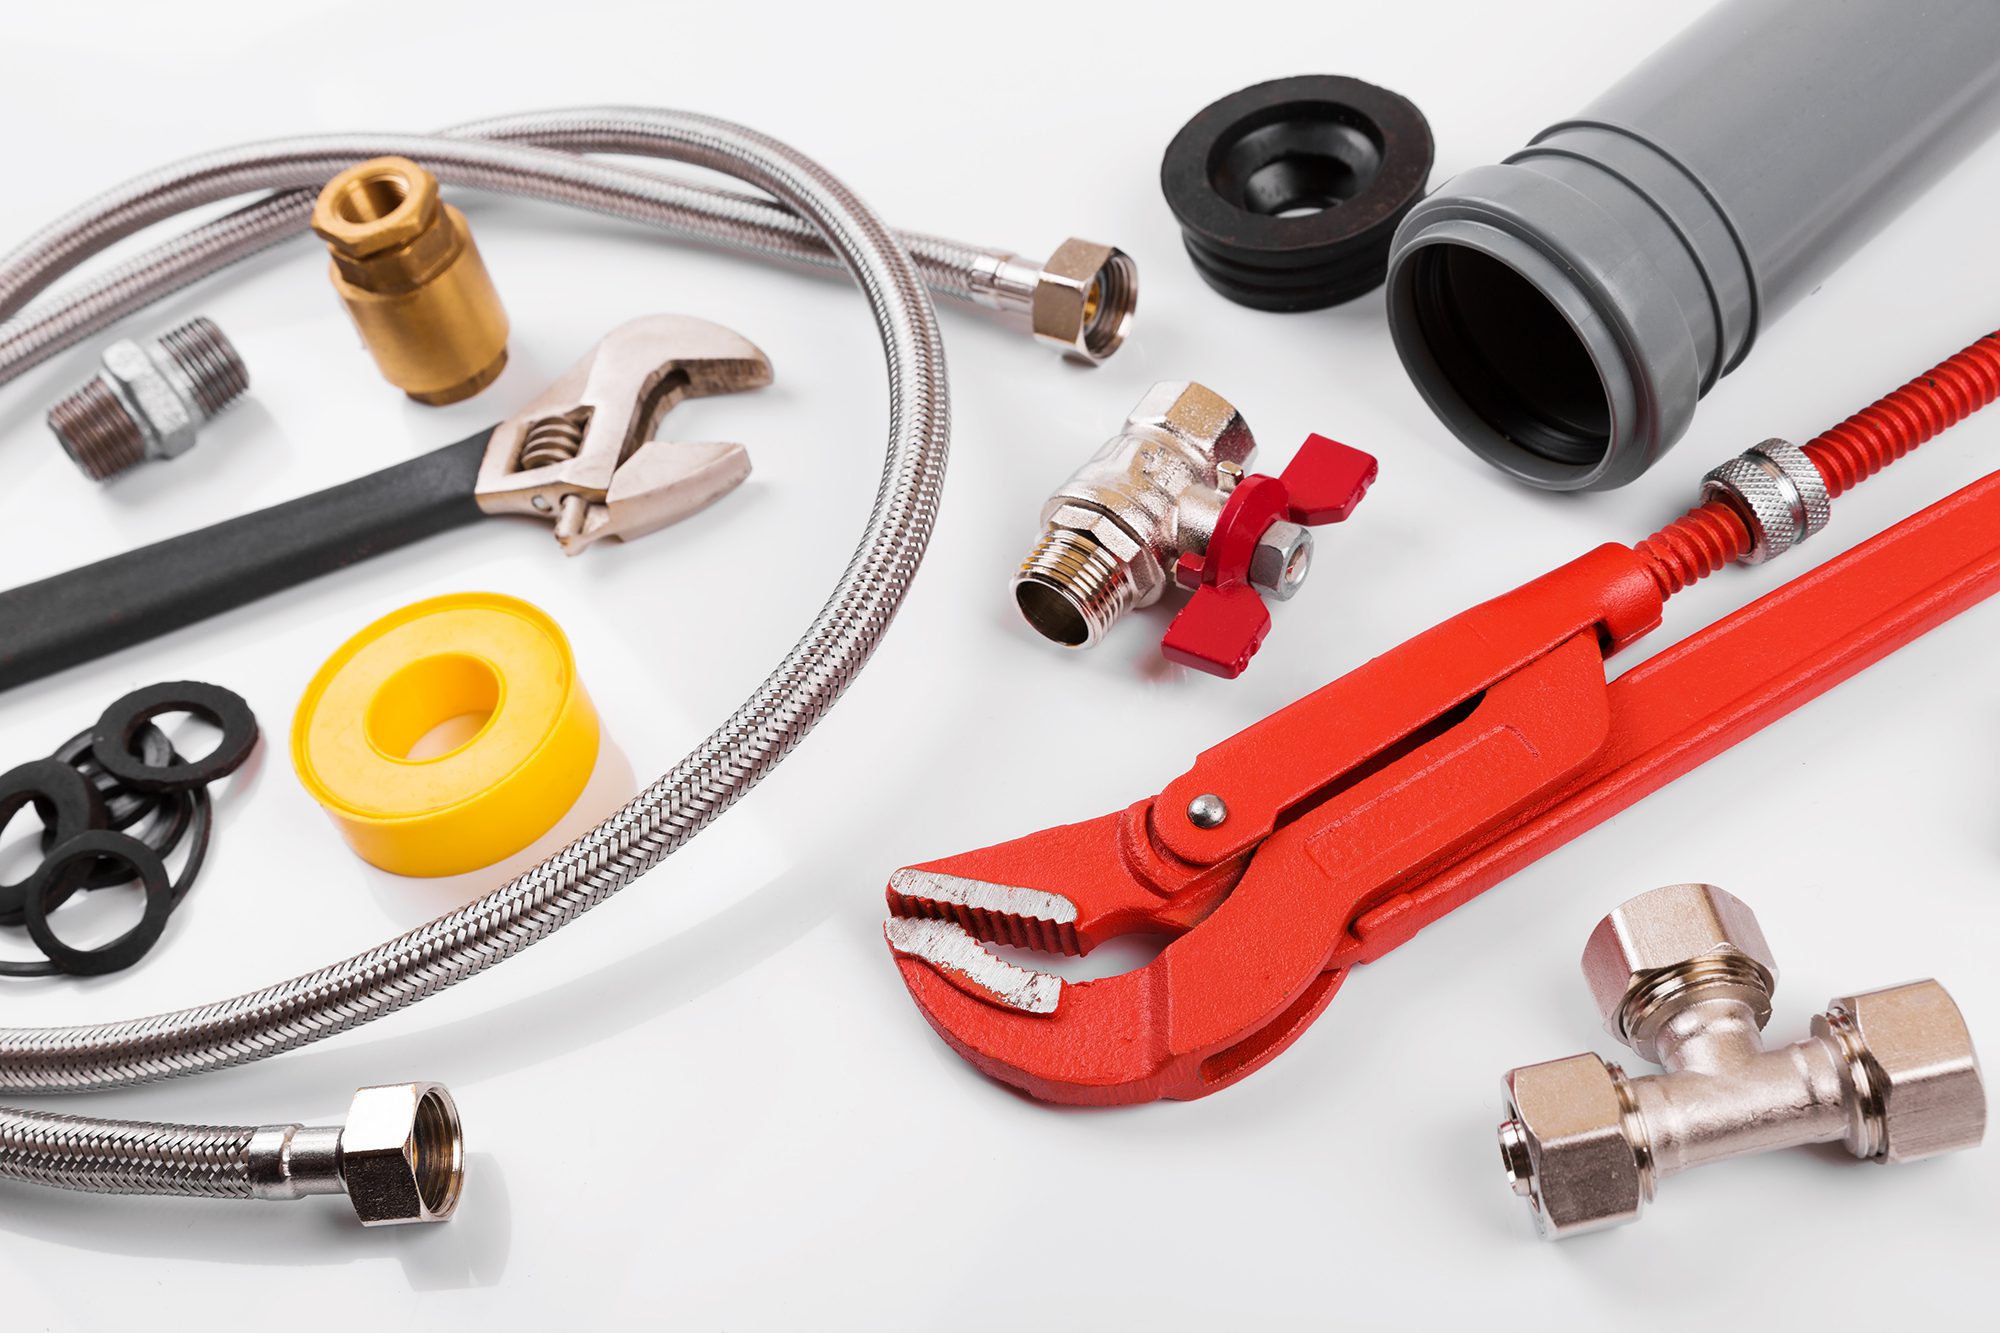 18 Plumbing Tools for Homeowners or Working Plumbers